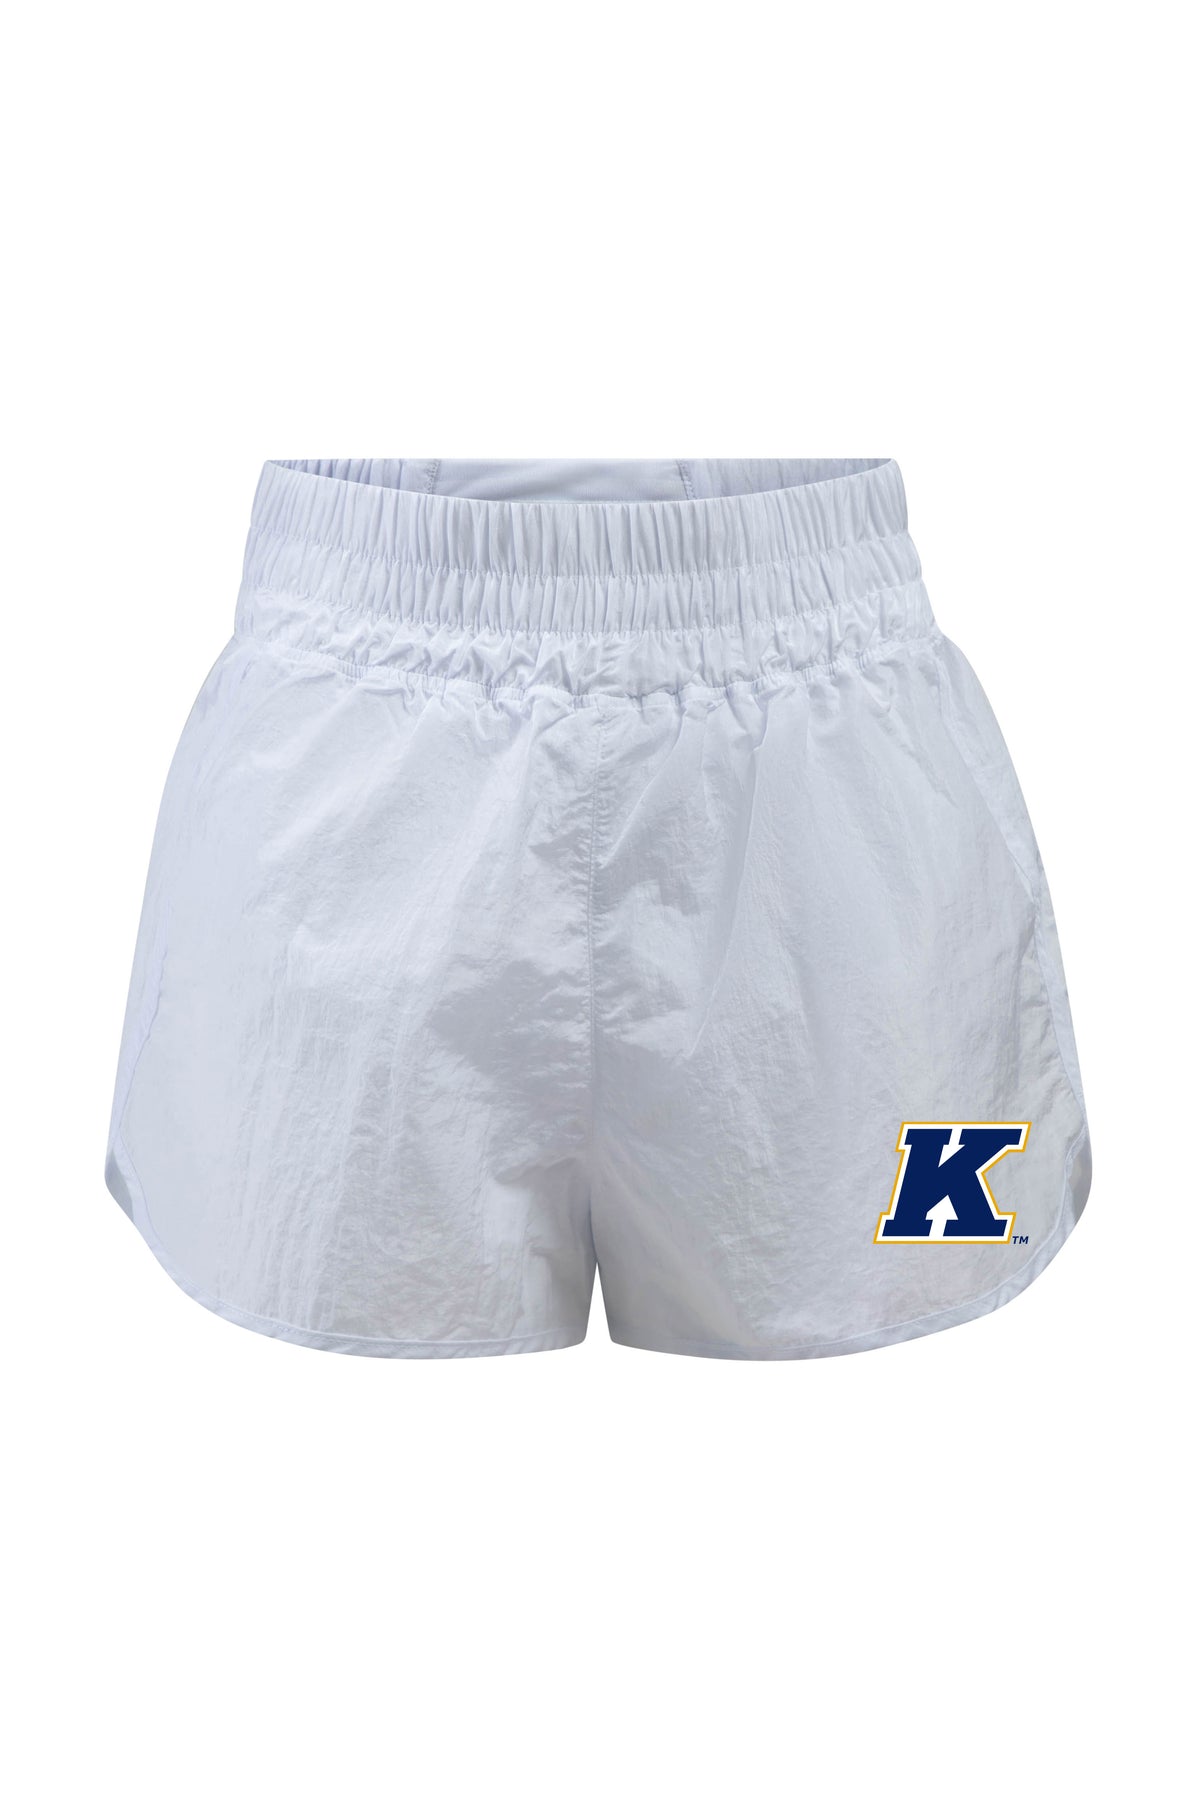 Kent State University Boxer Short